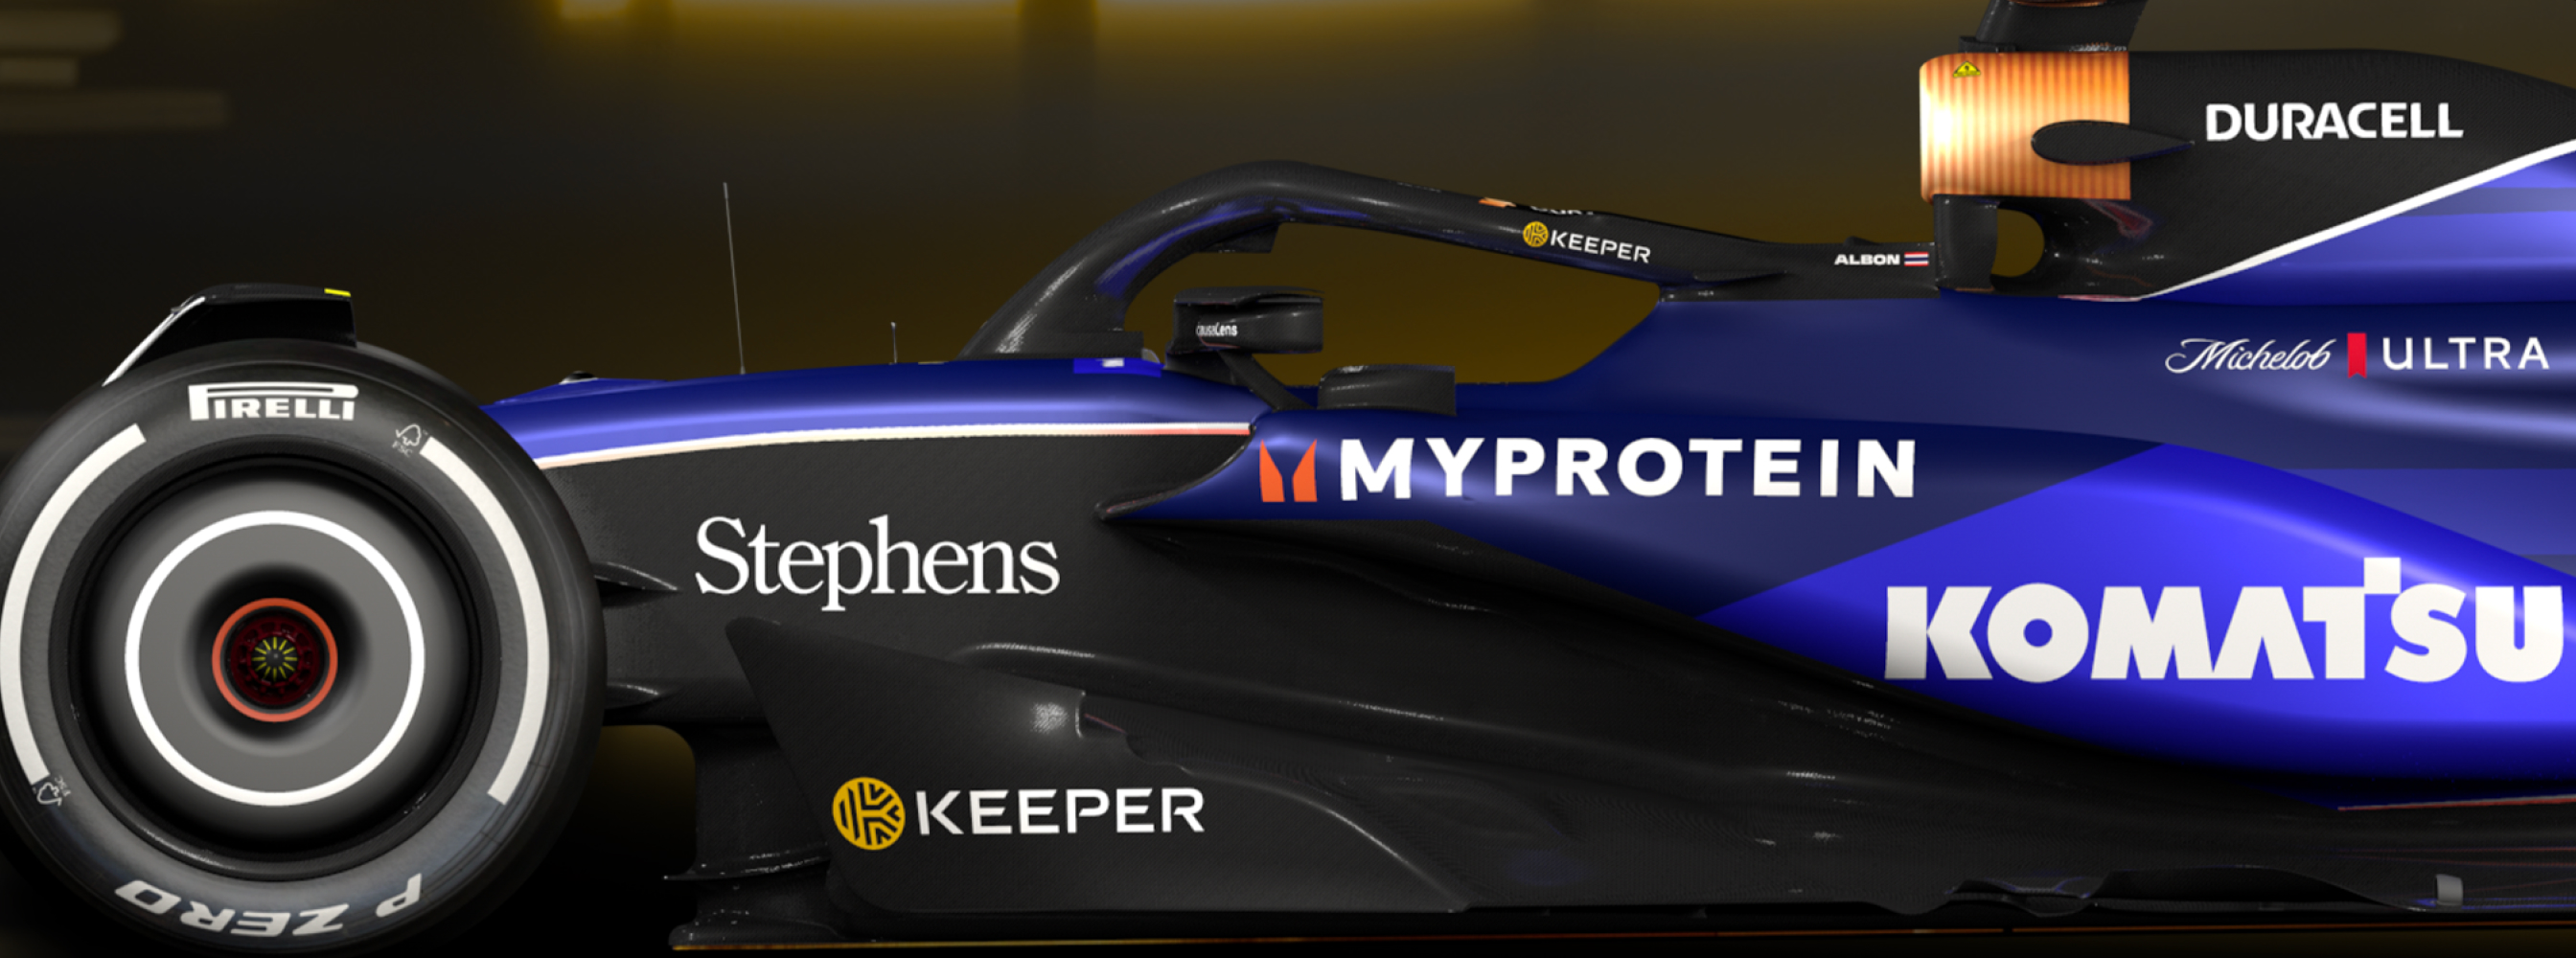 Keeper x Williams Racing - Accelerare l'innovazione